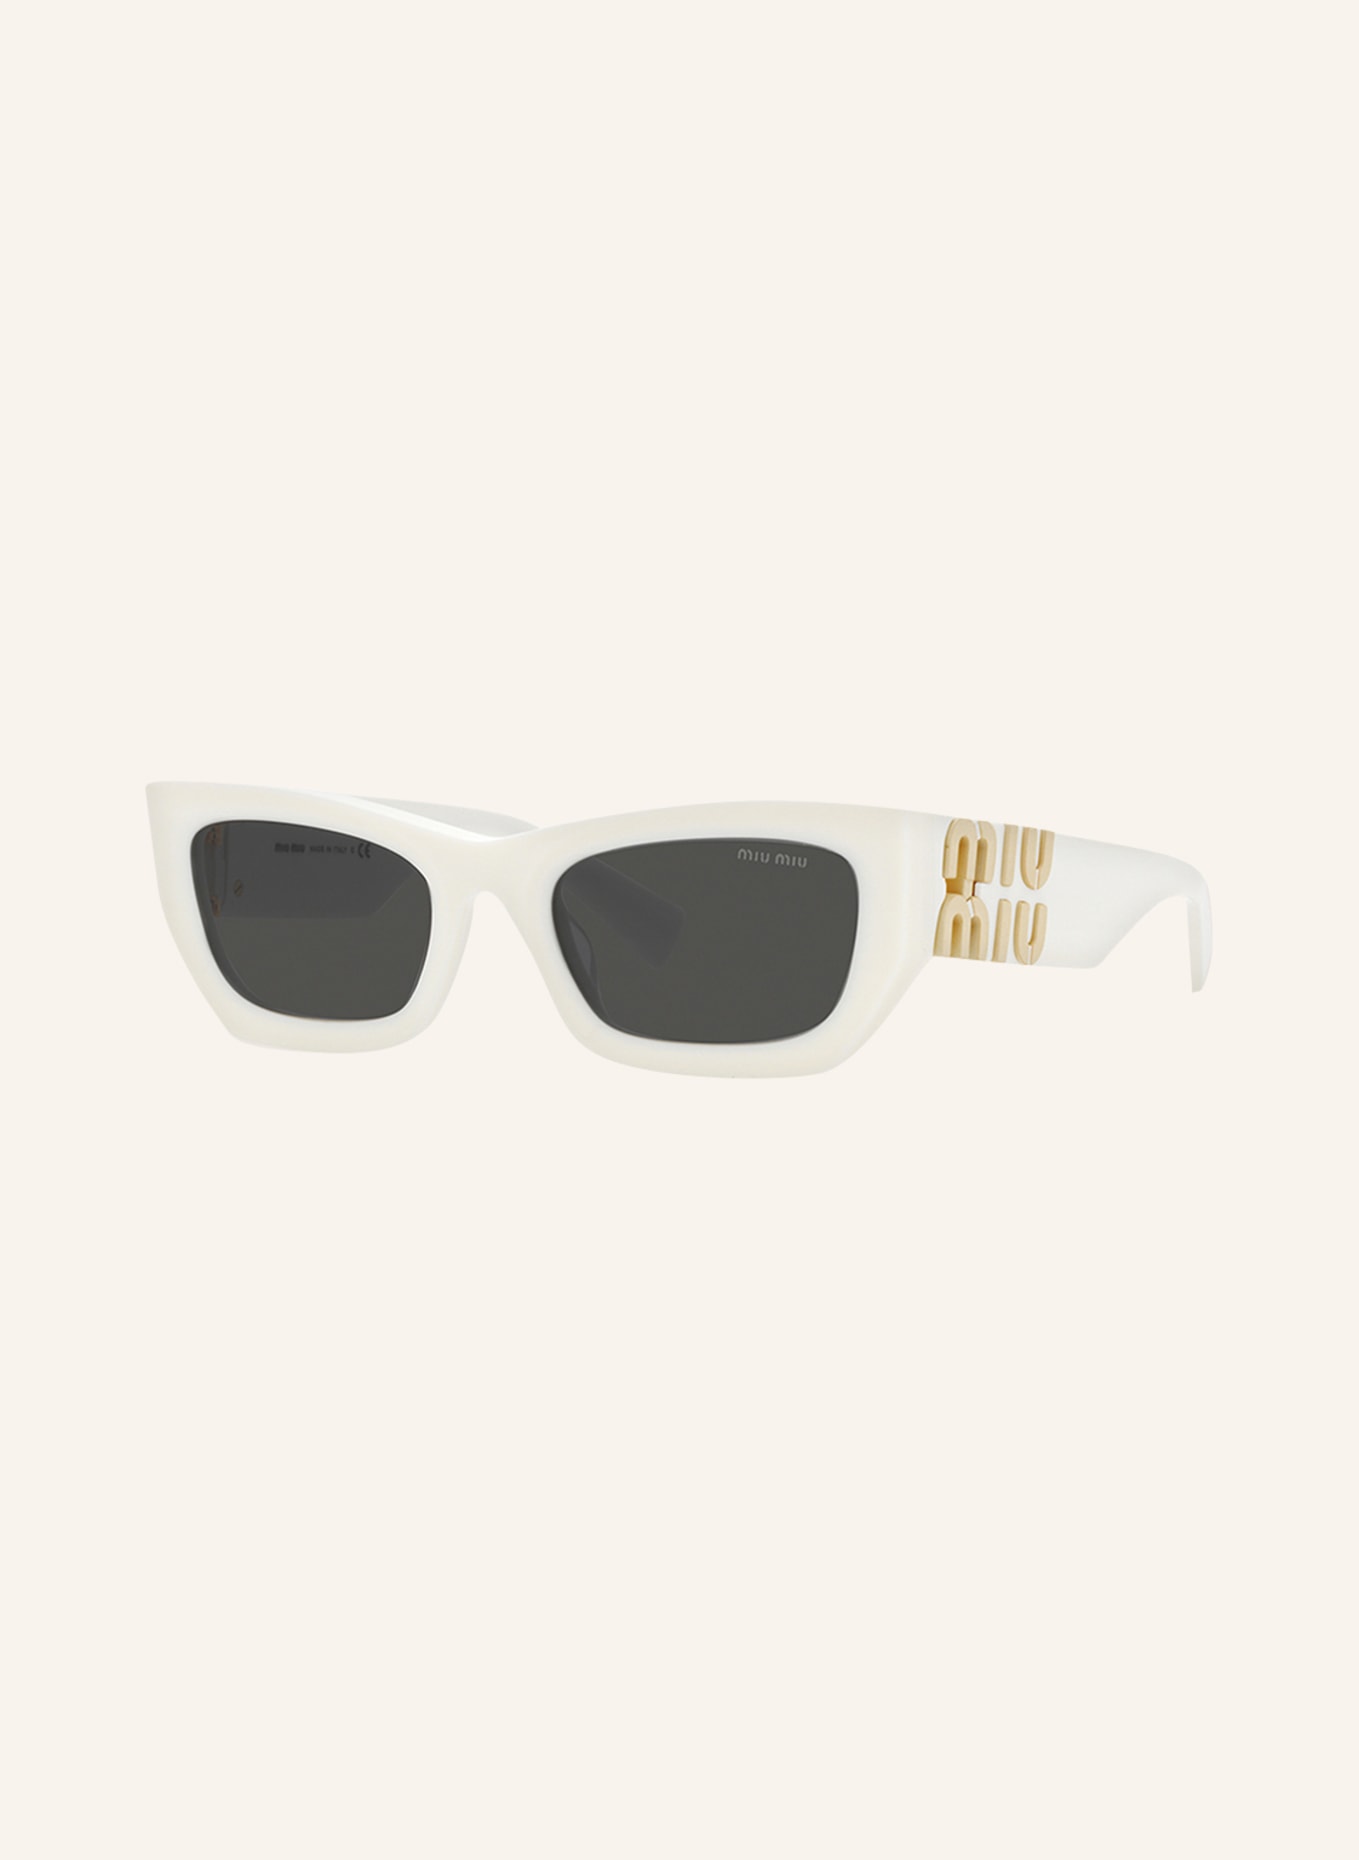 White Pentagon Miu Miu Sunglasses - Etsy